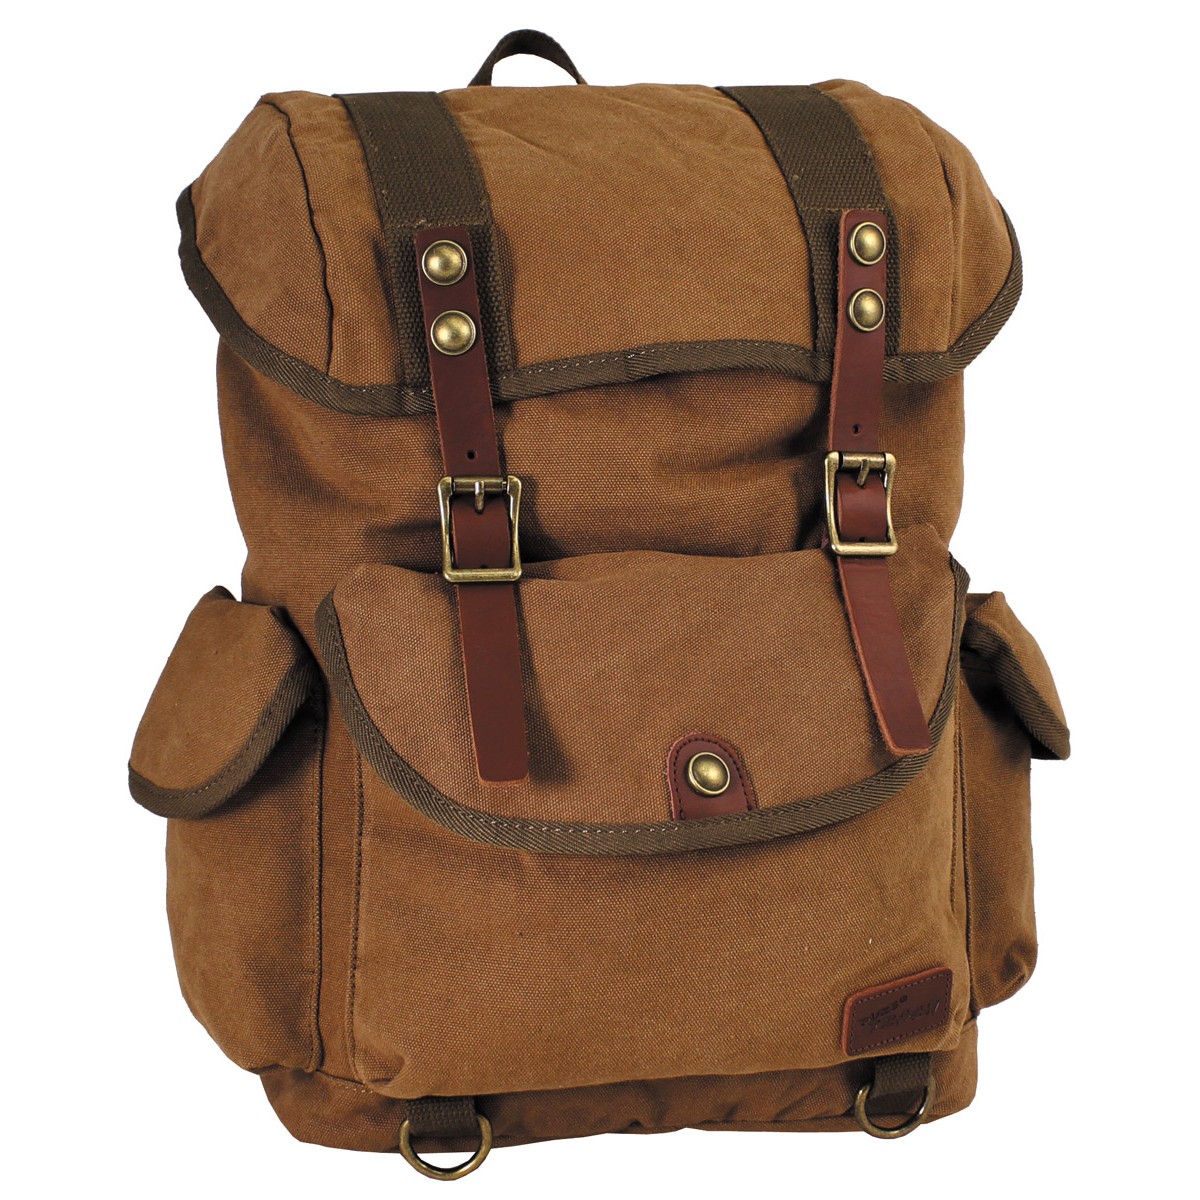 Retro Vintage Outdoor Canvas Backpack Bag 20L - Brown